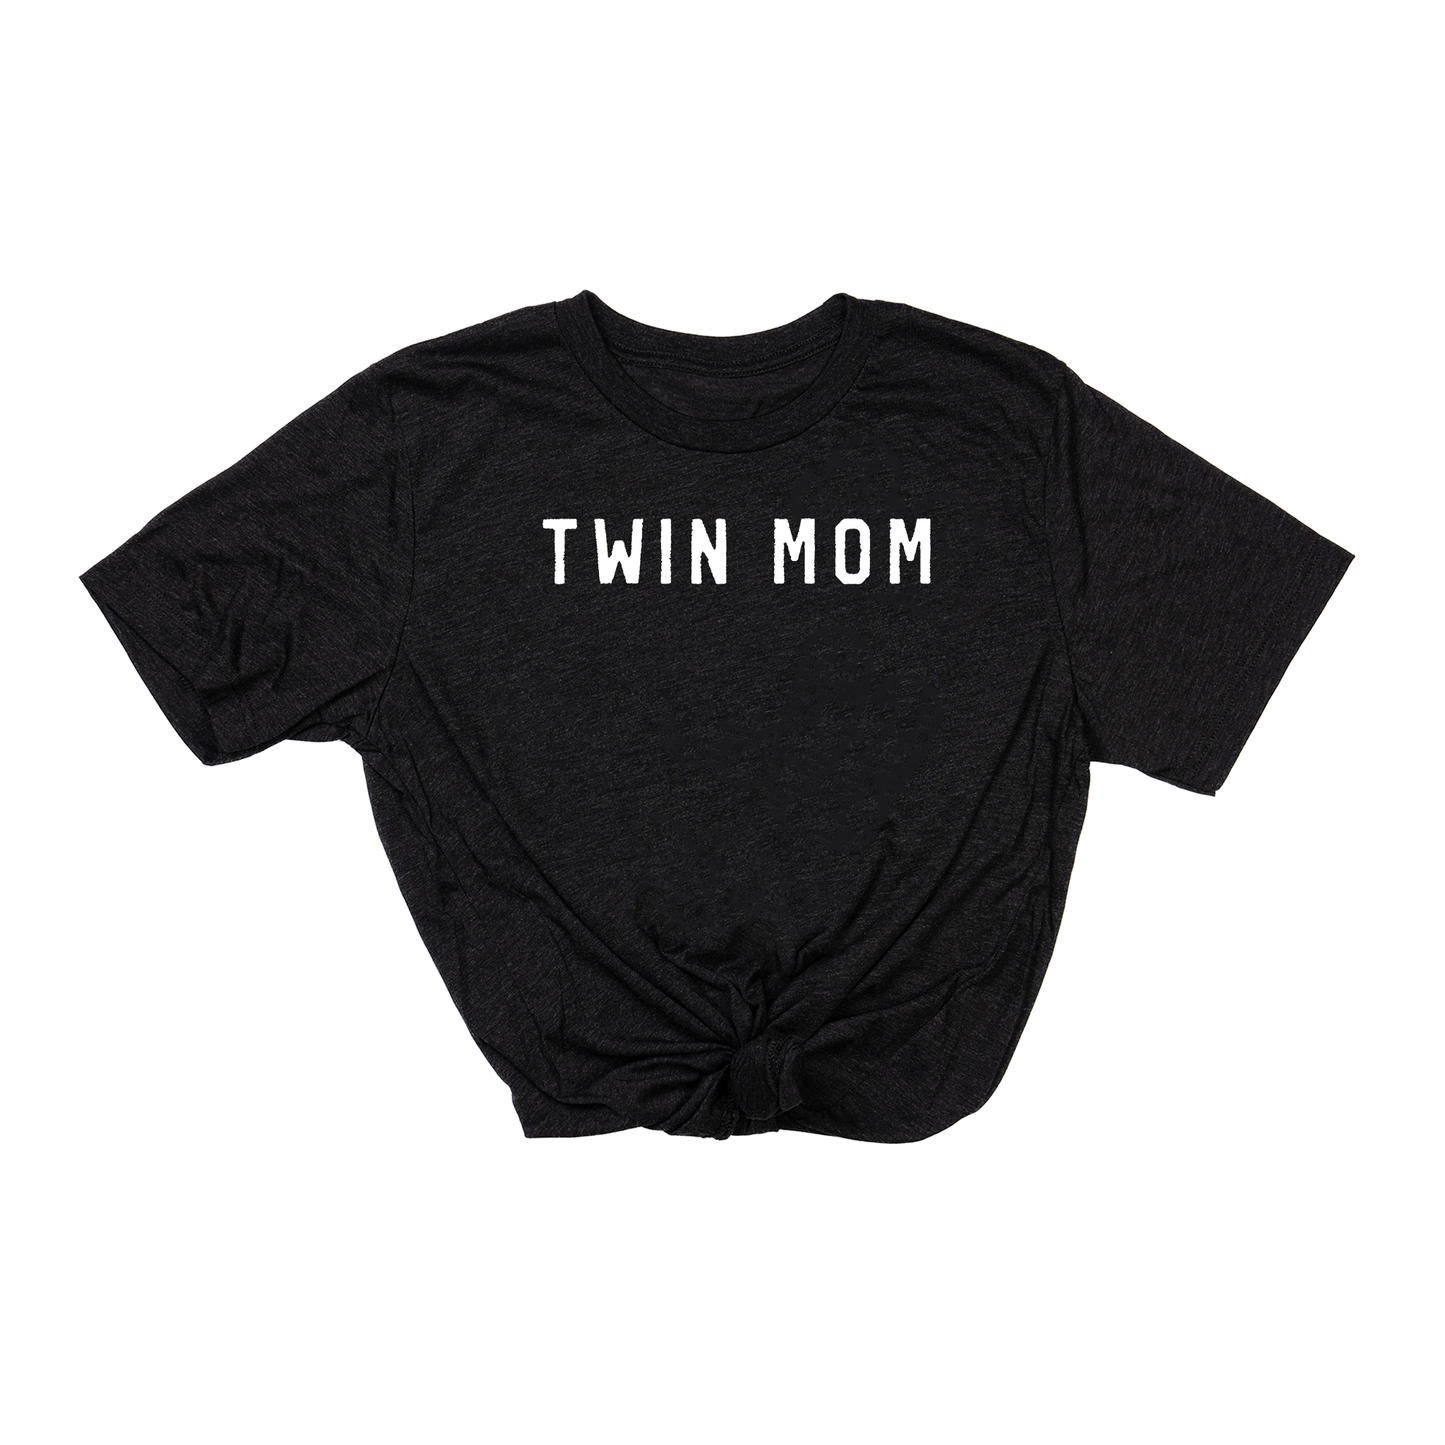 Twin Mom (White) - Tee (Charcoal Black)